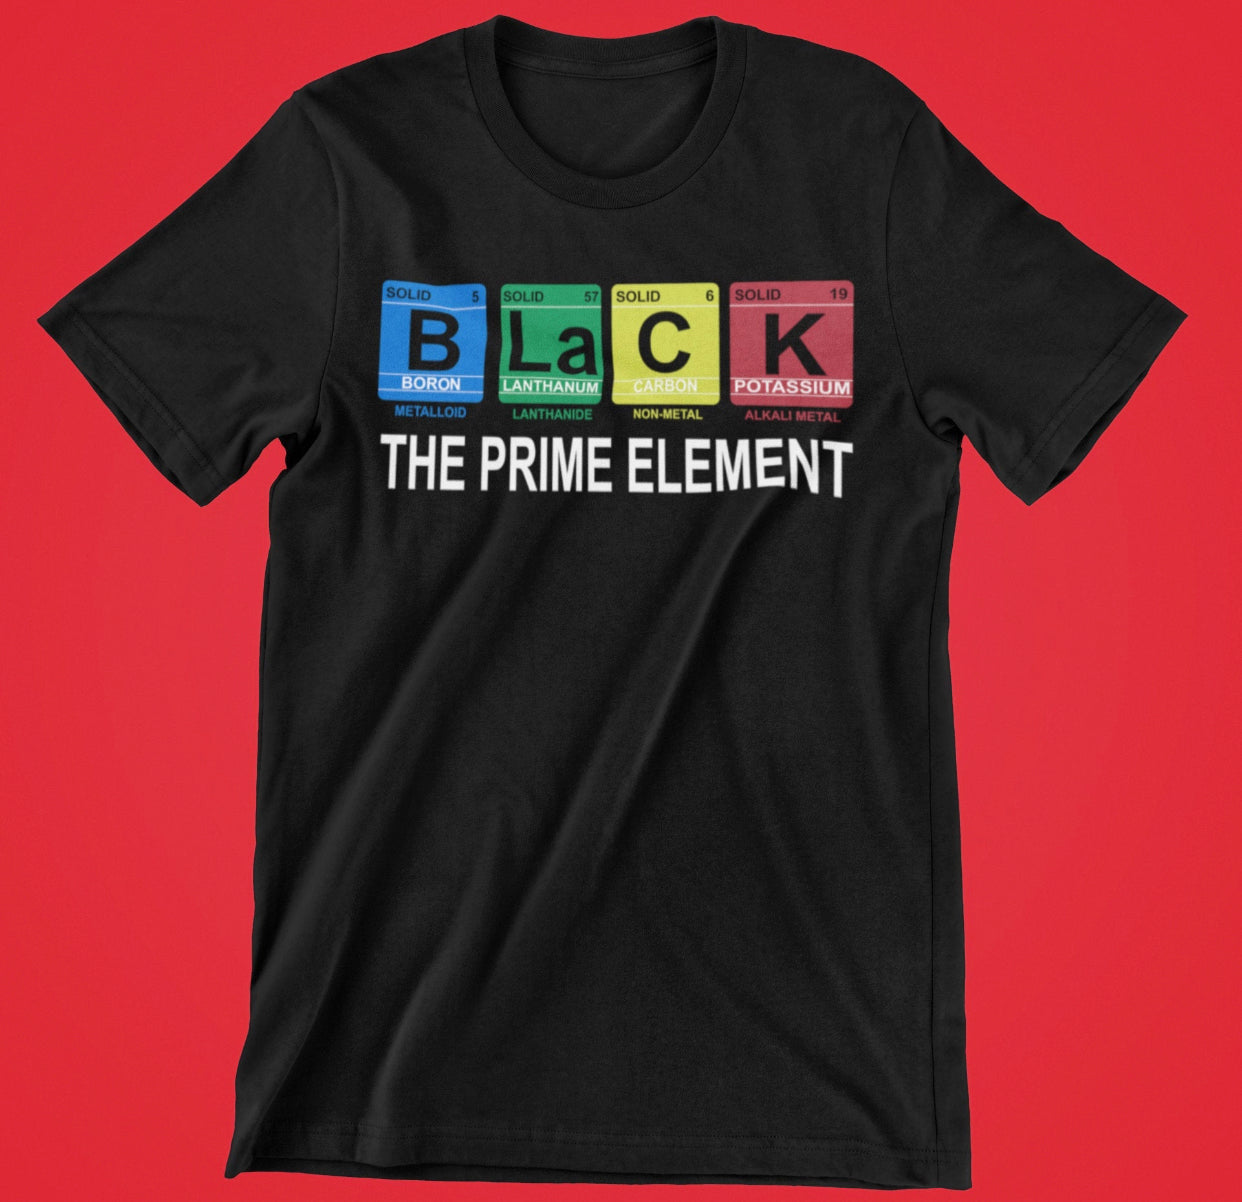 Black: the prime element